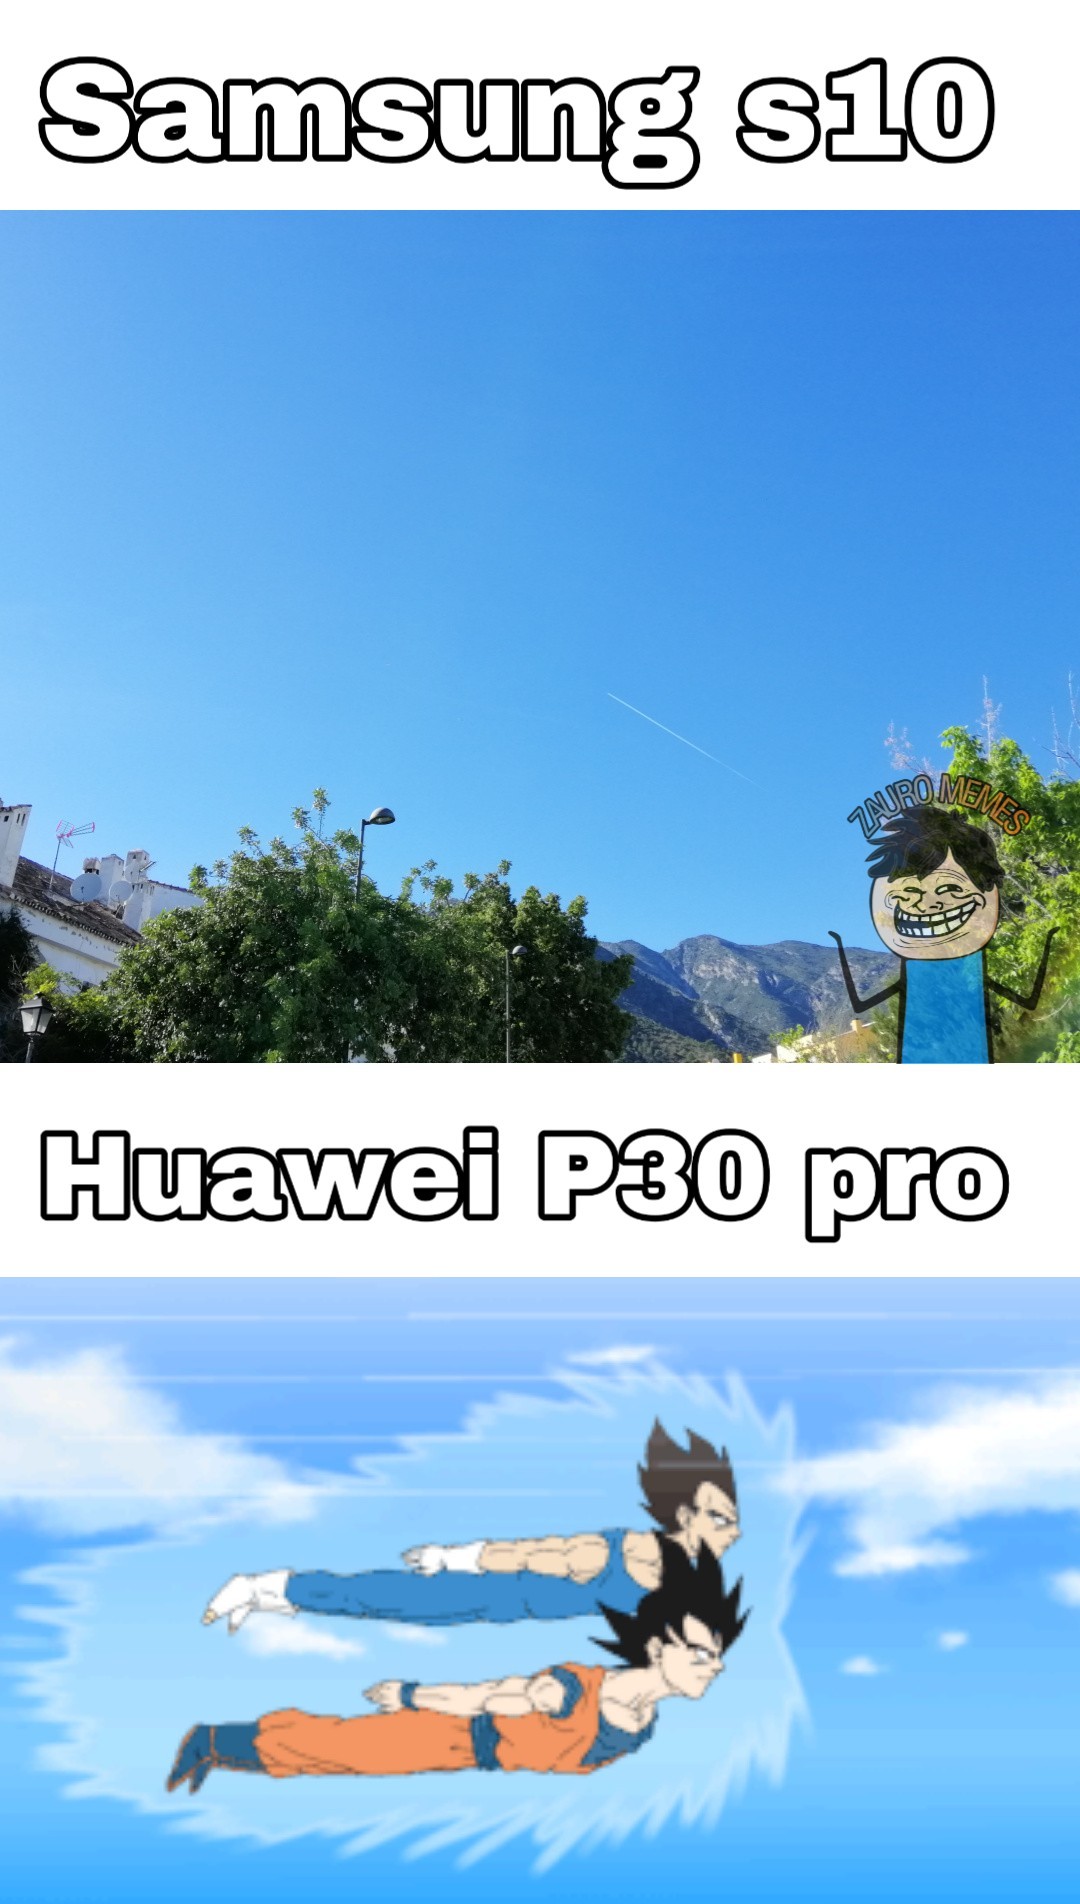 Samsung vs huawei - meme